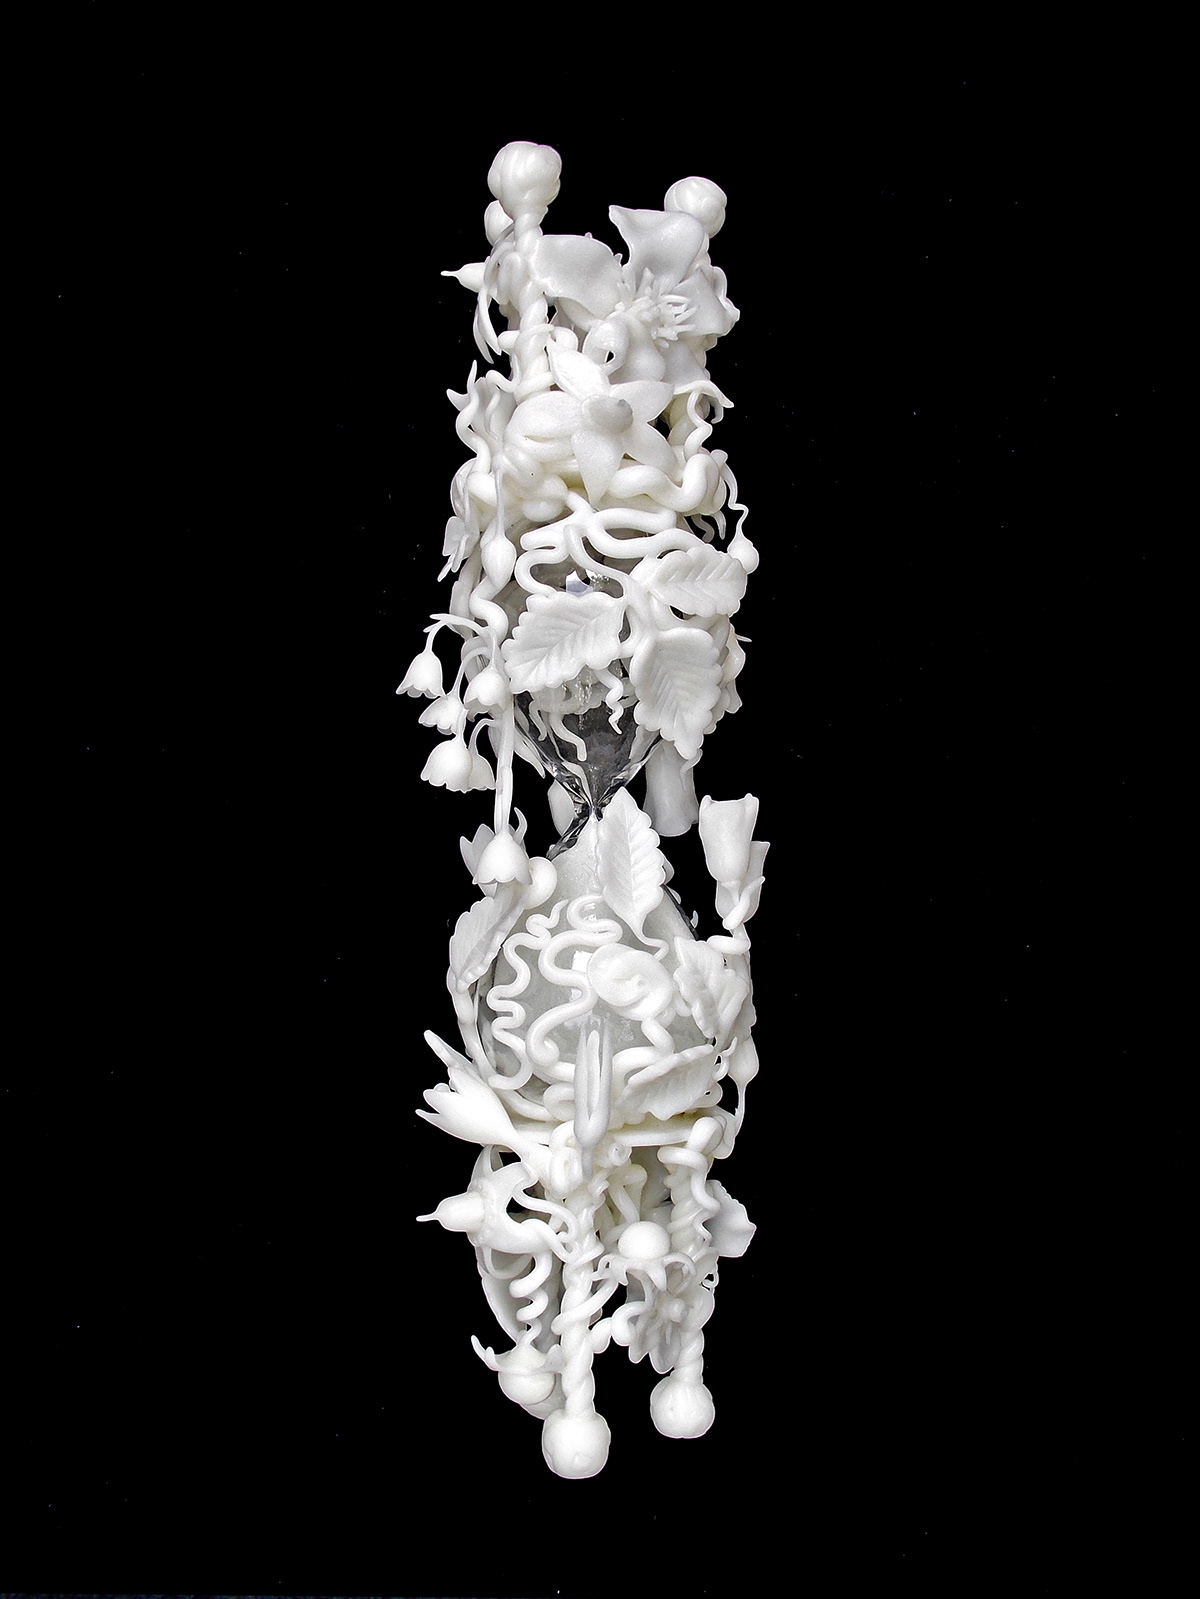 plastic  sculpture  flower  poisonous Beautiful  Death   hourglass belladonna  oleander  nightshade  foxglove  angels trumpet  horticulture